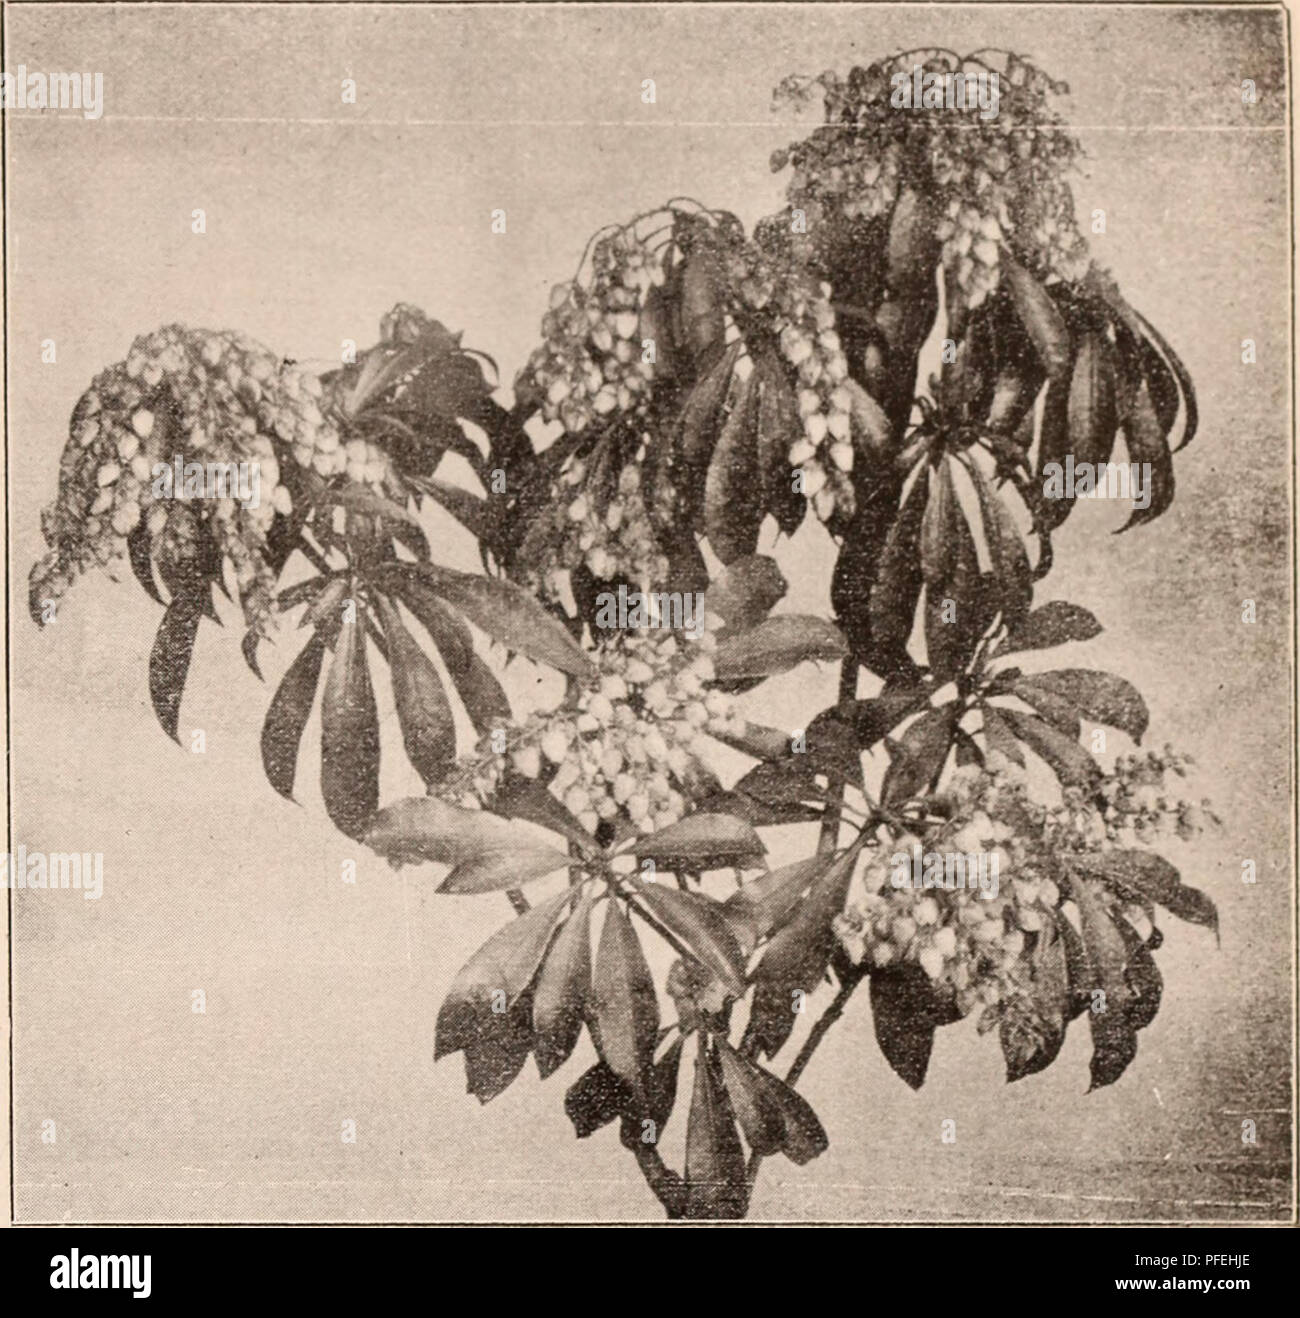 . Descriptive catalogue of flowering, ornamental trees, shrubs, bulbs, herbs, climbers, fruit trees, &amp;c., &amp;c., &amp;c. / for sale by the Yokohama Nursery Co., Limited.. Nursery Catalogue. CATALOGUE OV TUK YOKOHAMA NURSERY Co., Ltd. (LjU). 31 Albizziii julibrissiii, tiift-likc flower, ])iimate leaves fold down during the Jiiglit, good for planting along walks in garden (pot grown per 10, $2.00. -height : 1-L| ft. Audroiiieda cii!ii|)auiiliila — height : U-2 ft. ; per 10, $1.75. Ditto height: 2-3 ft. ; per 10, .S2.00. Androiiiedo japoiiica, shrubs, ]) e n d u 1 o u s clustered flt)Wer5,  Stock Photo